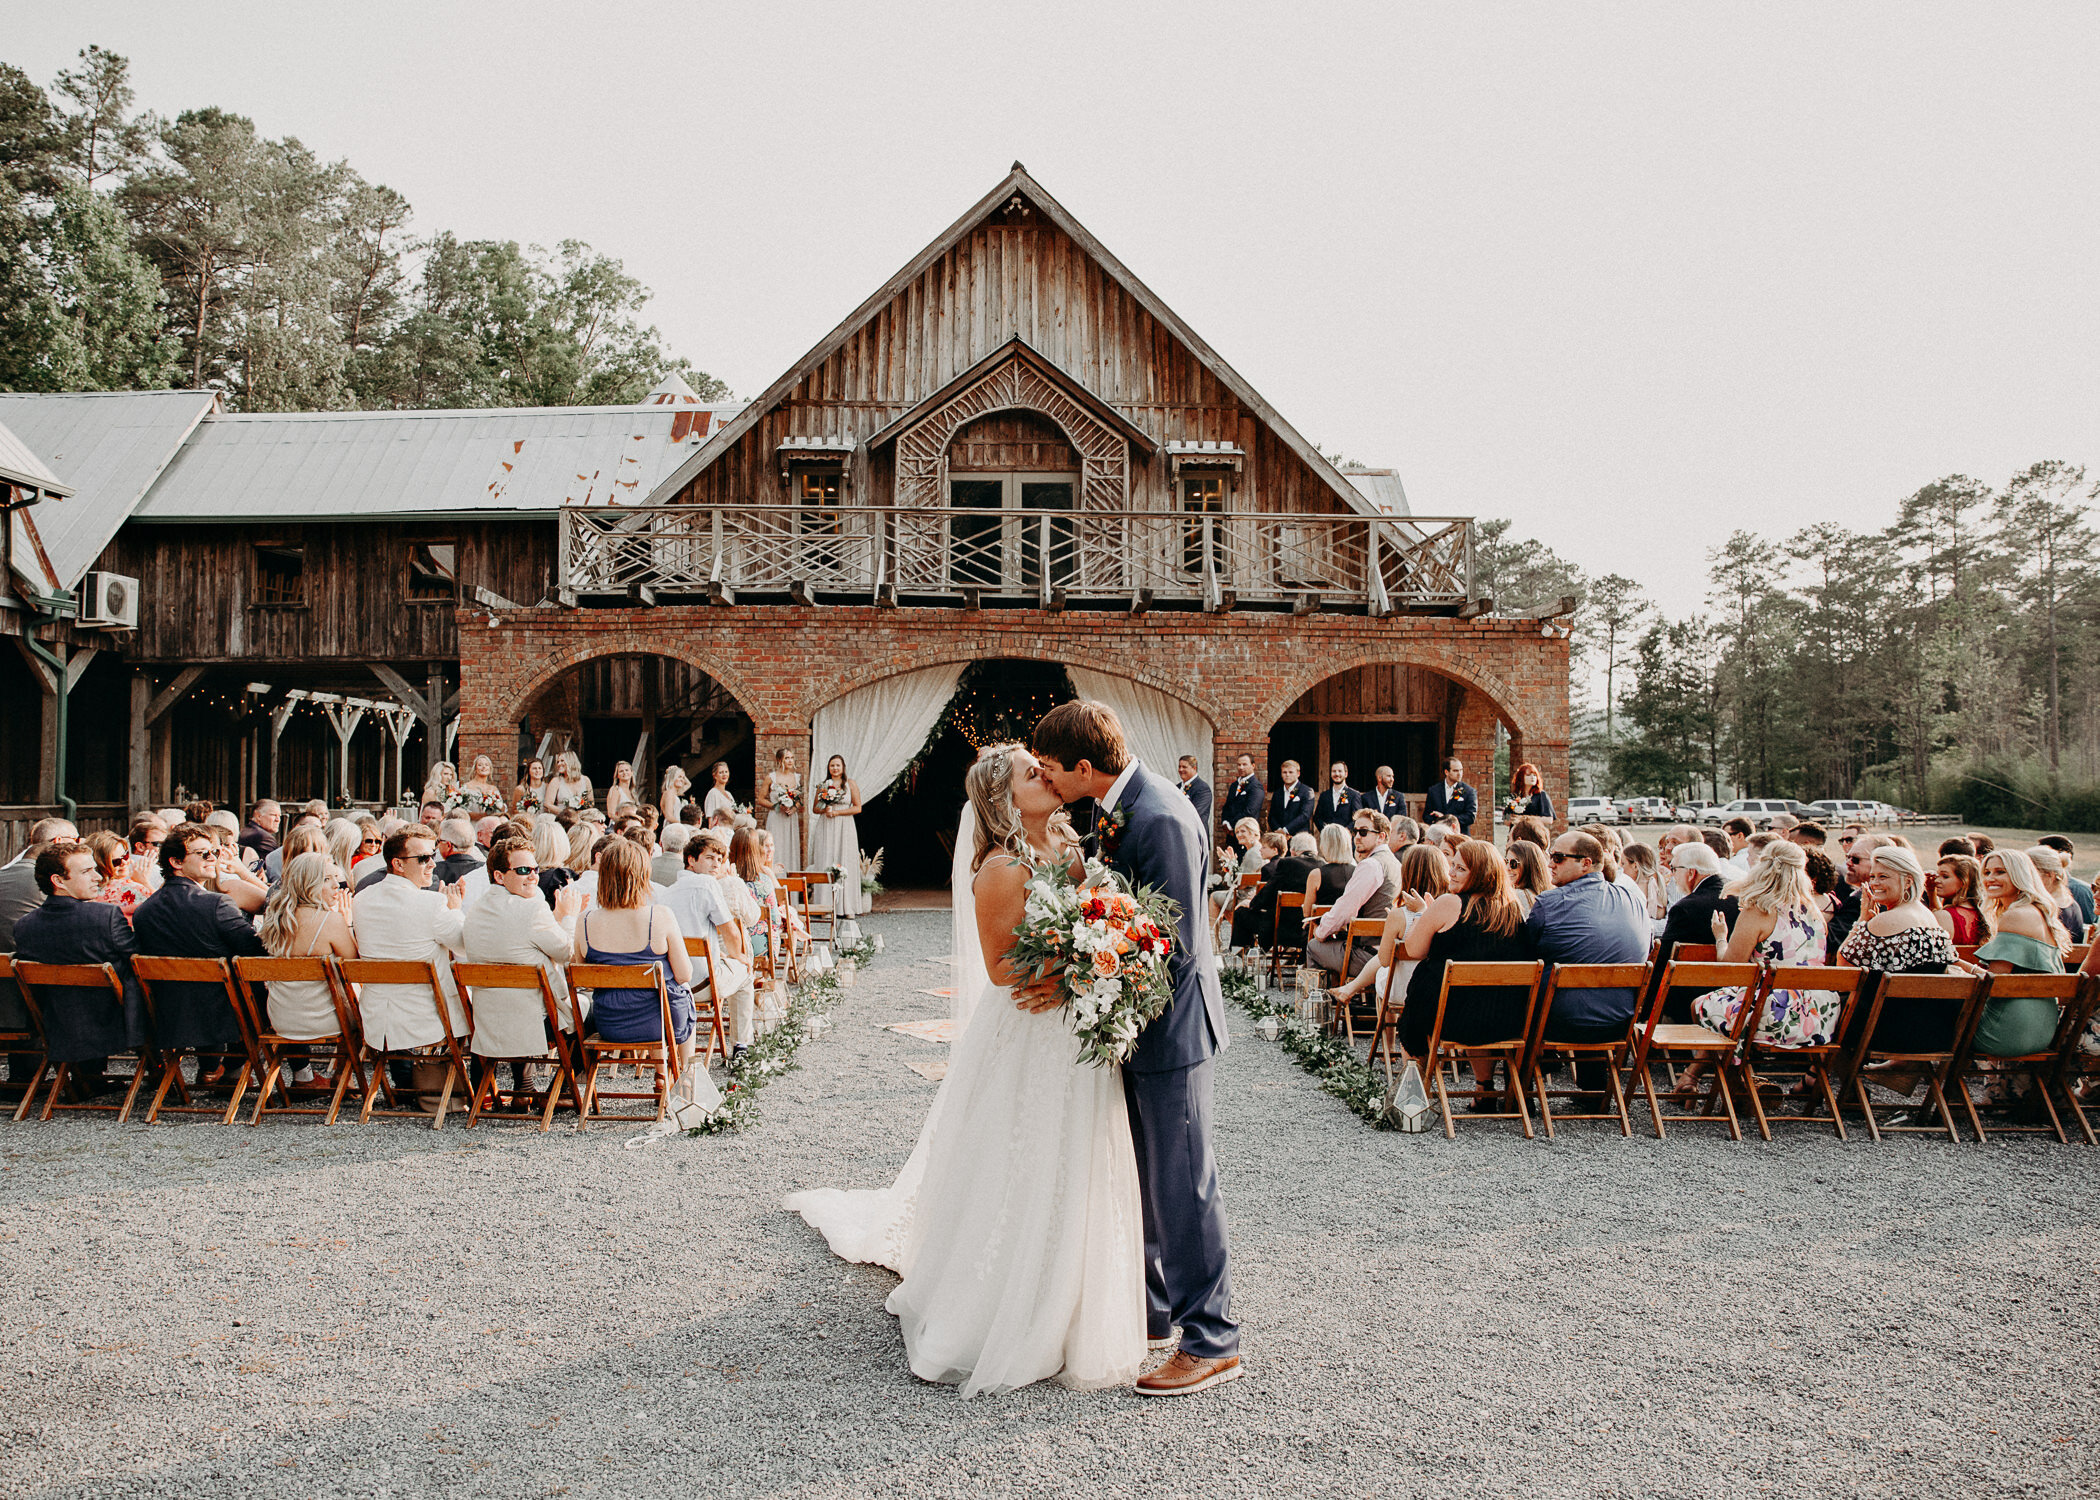 Atlanta_Wedding Day || The Farm at Rome-Ga, Aline Marin Photography75.jpg